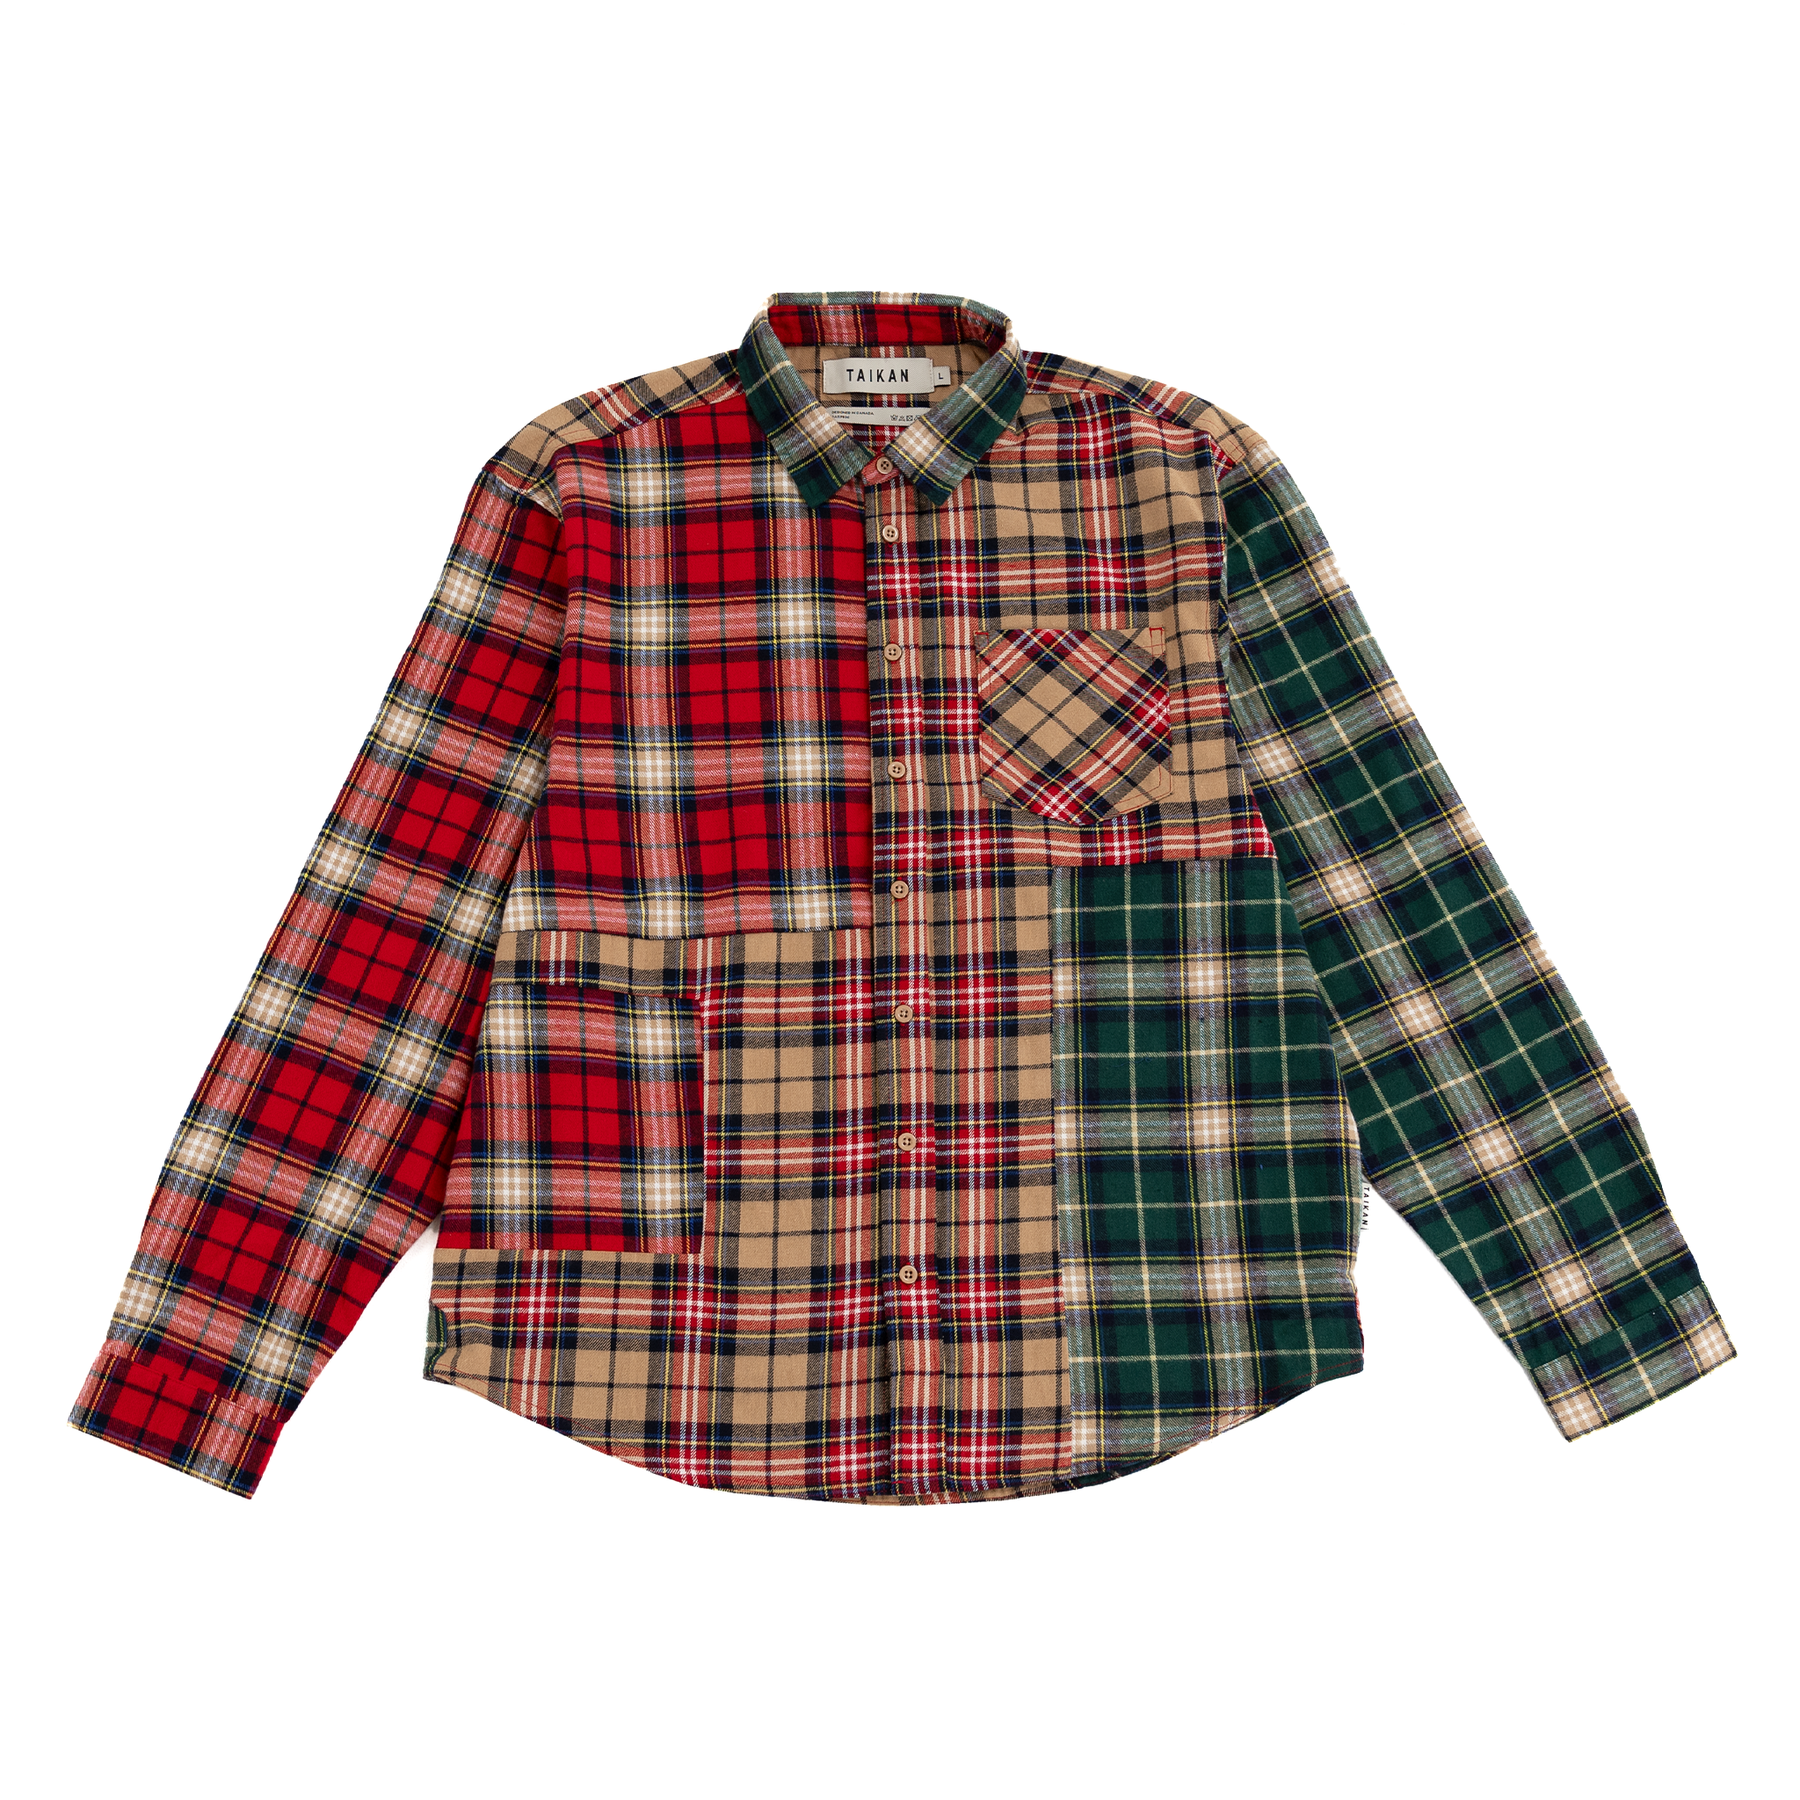 Taikan - Patchwork LS Shirt - Sand/Pine/Red